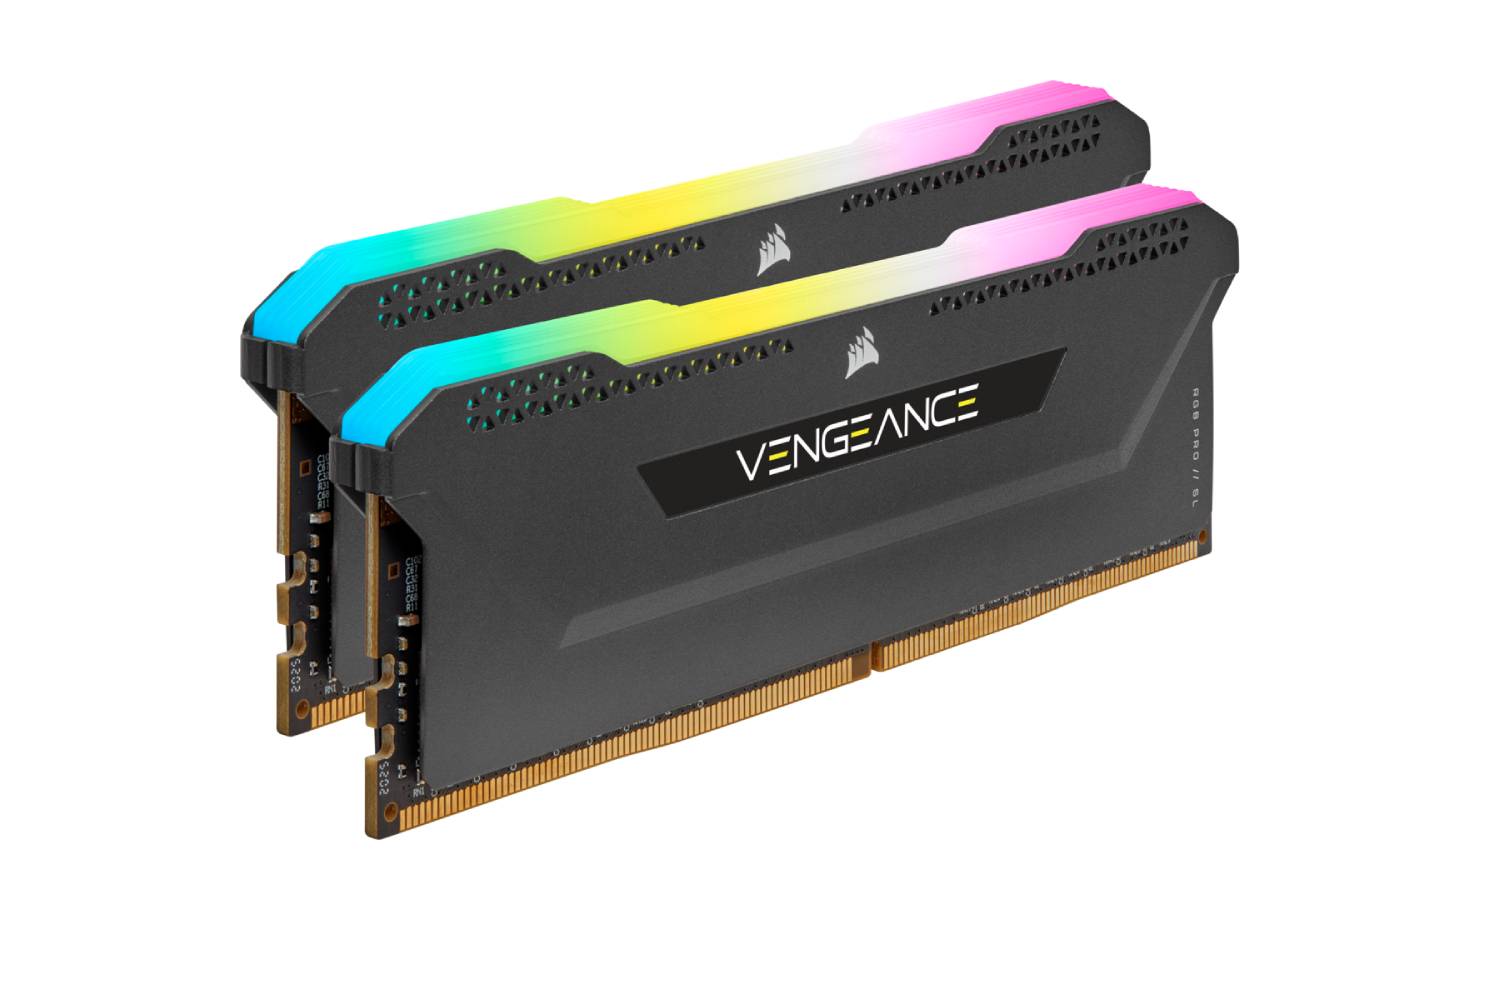 Corsair VENGEANCE RGB PRO SL 32GB (2x16GB) DDR4 DRAM 3600MHz C18 Memory Kit – Black